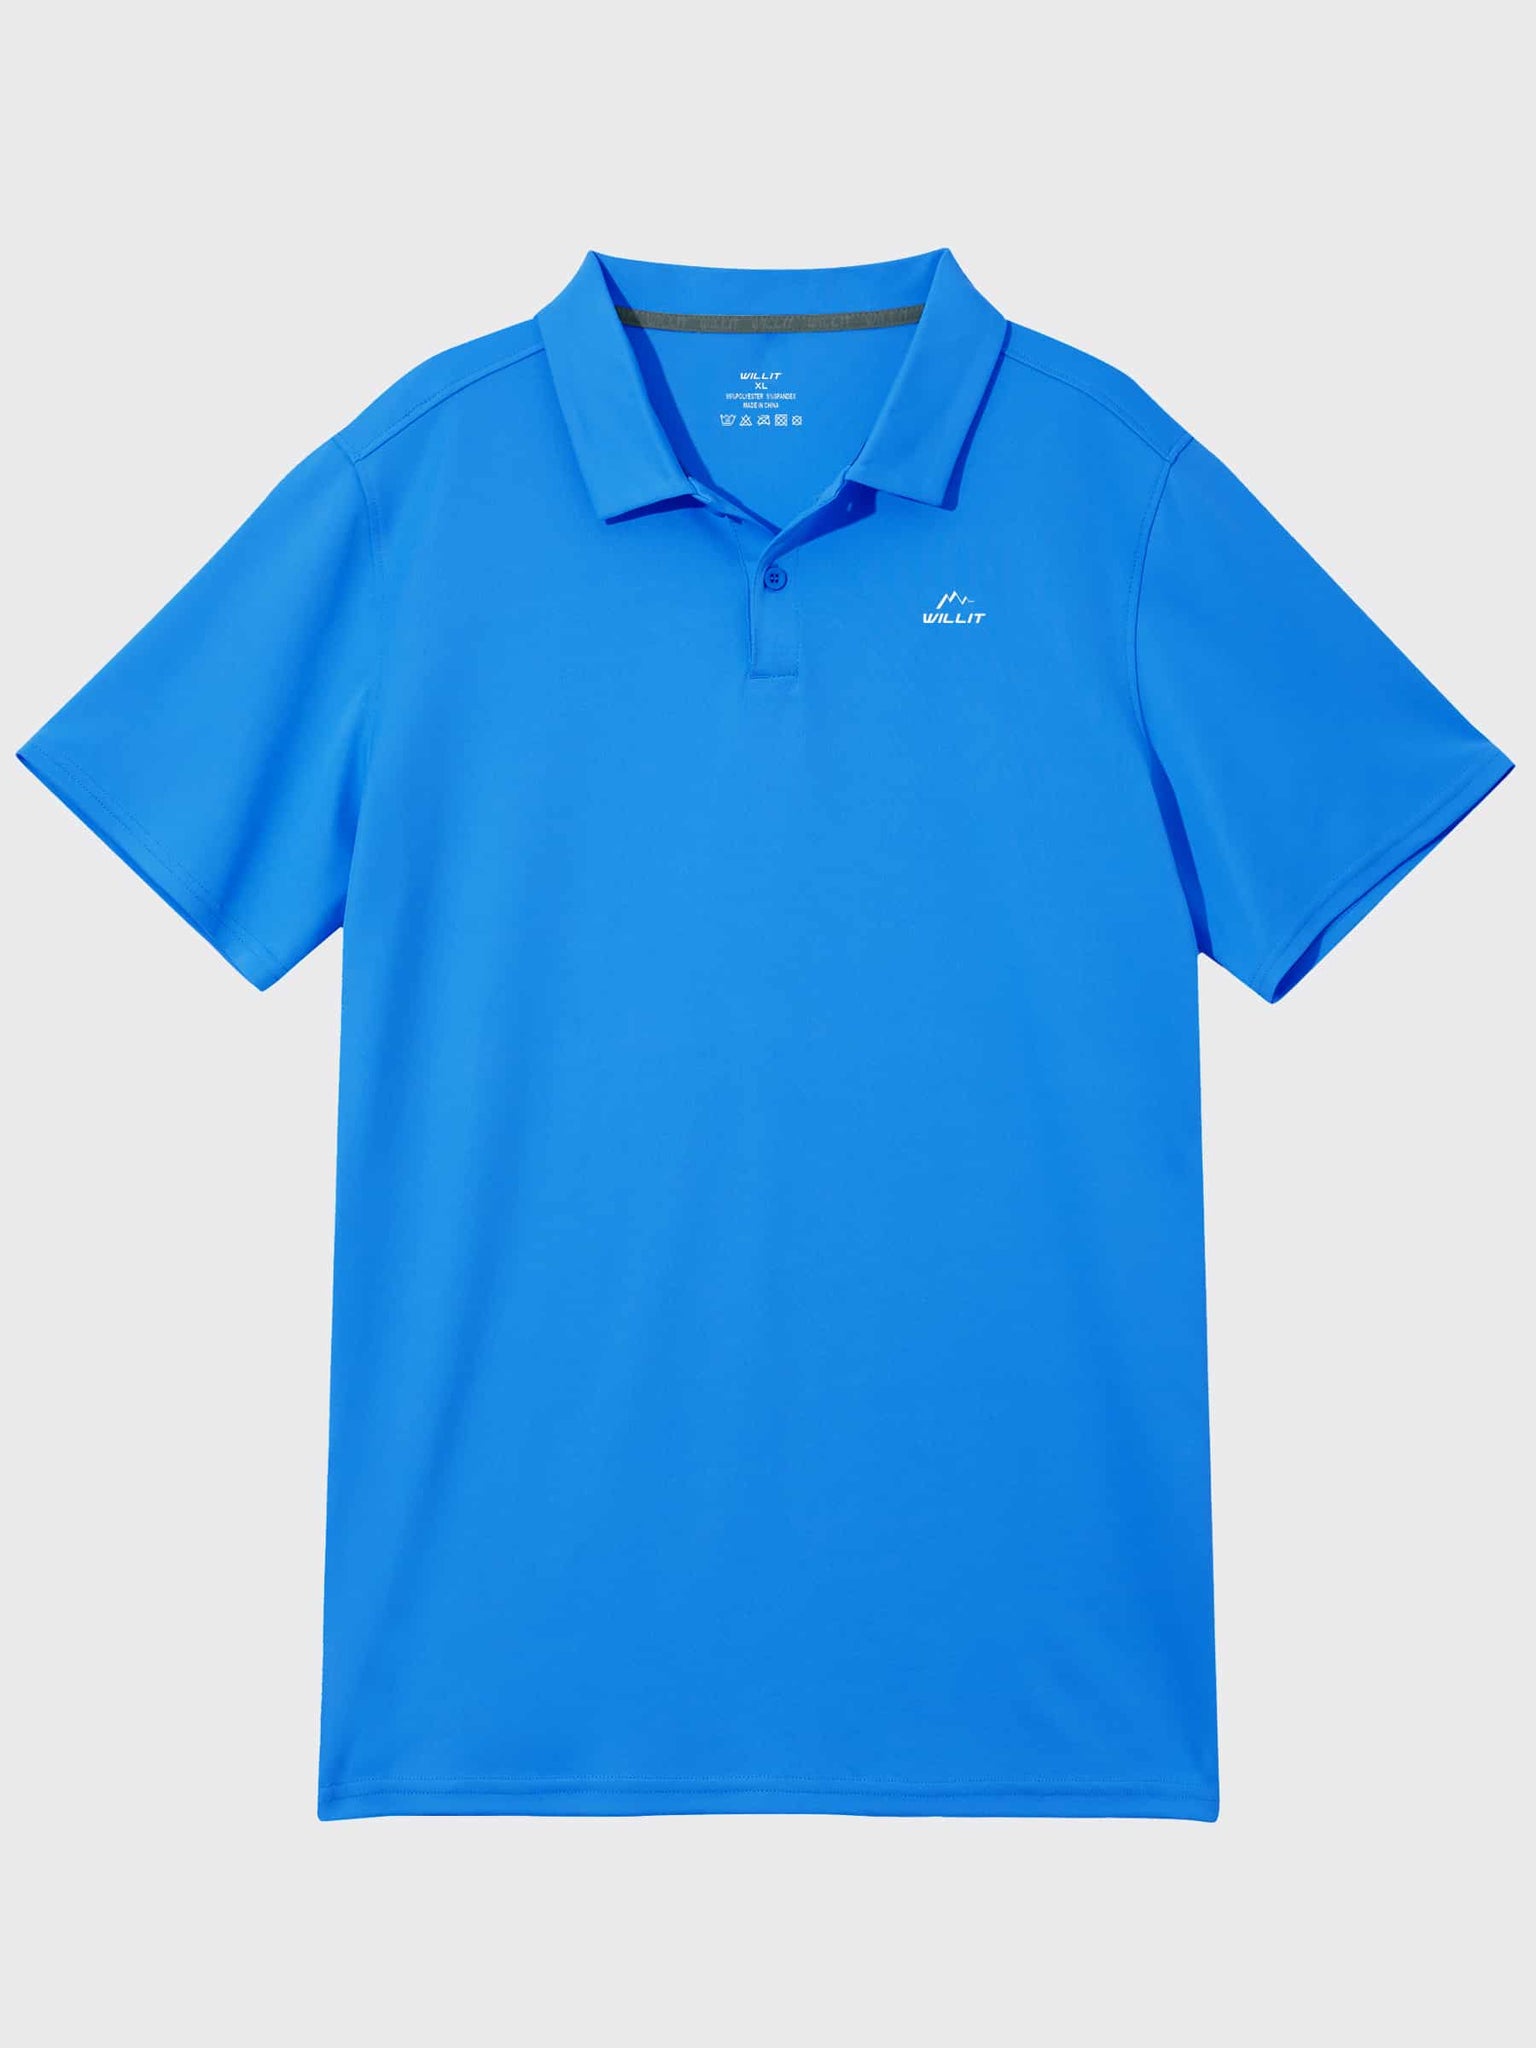 Youth Golf Polo Sun Shirts_BrilliantBlue_laydown4